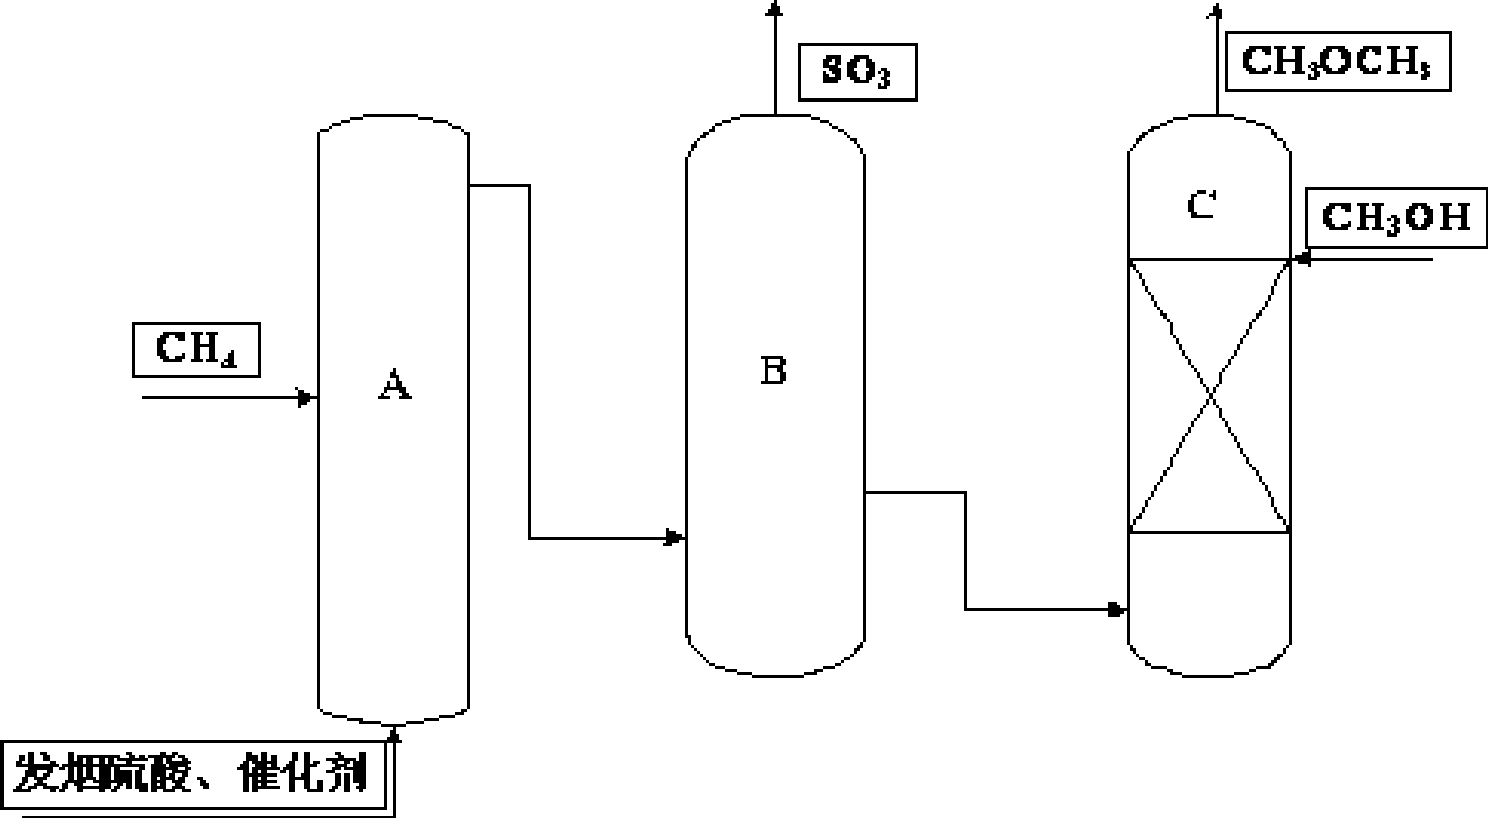 Process for preparing dimethyl ether